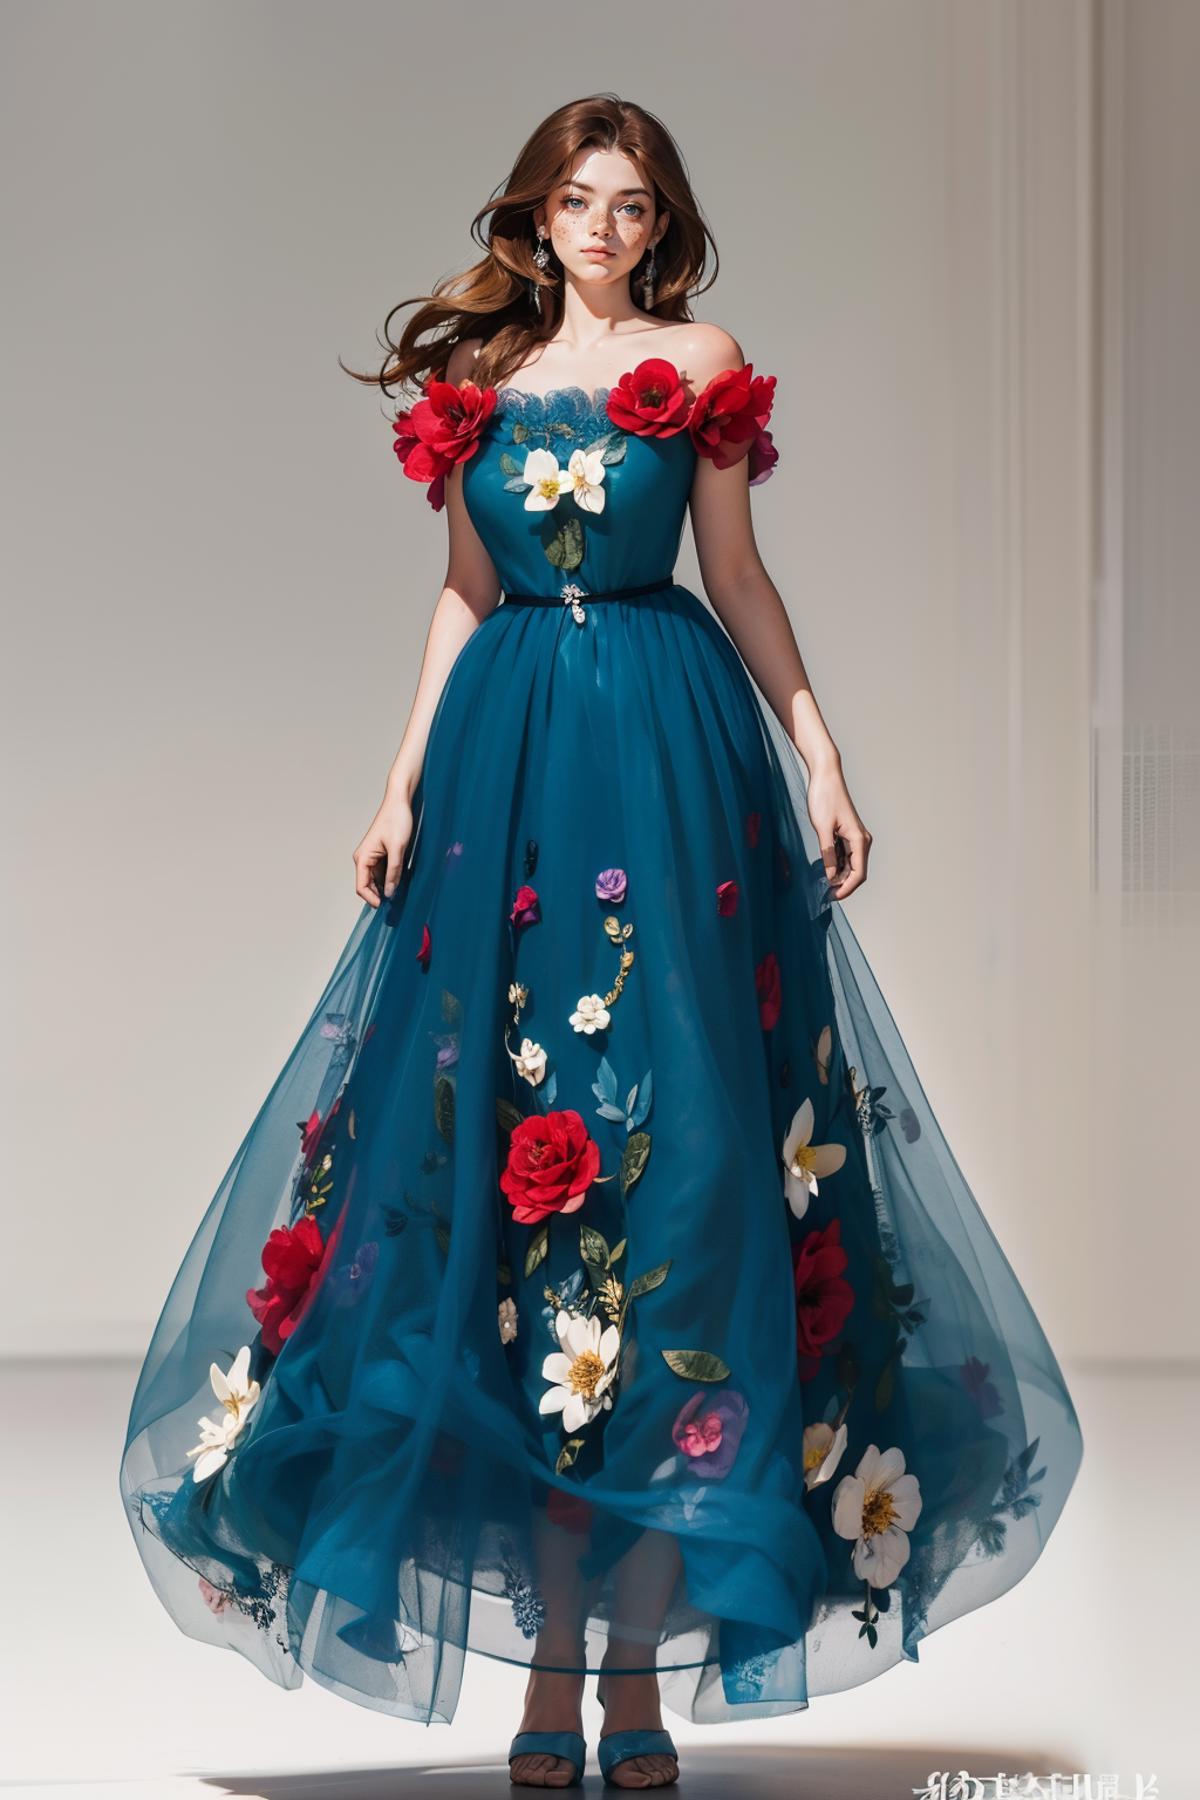 Blue & Flower Dress image by freckledvixon